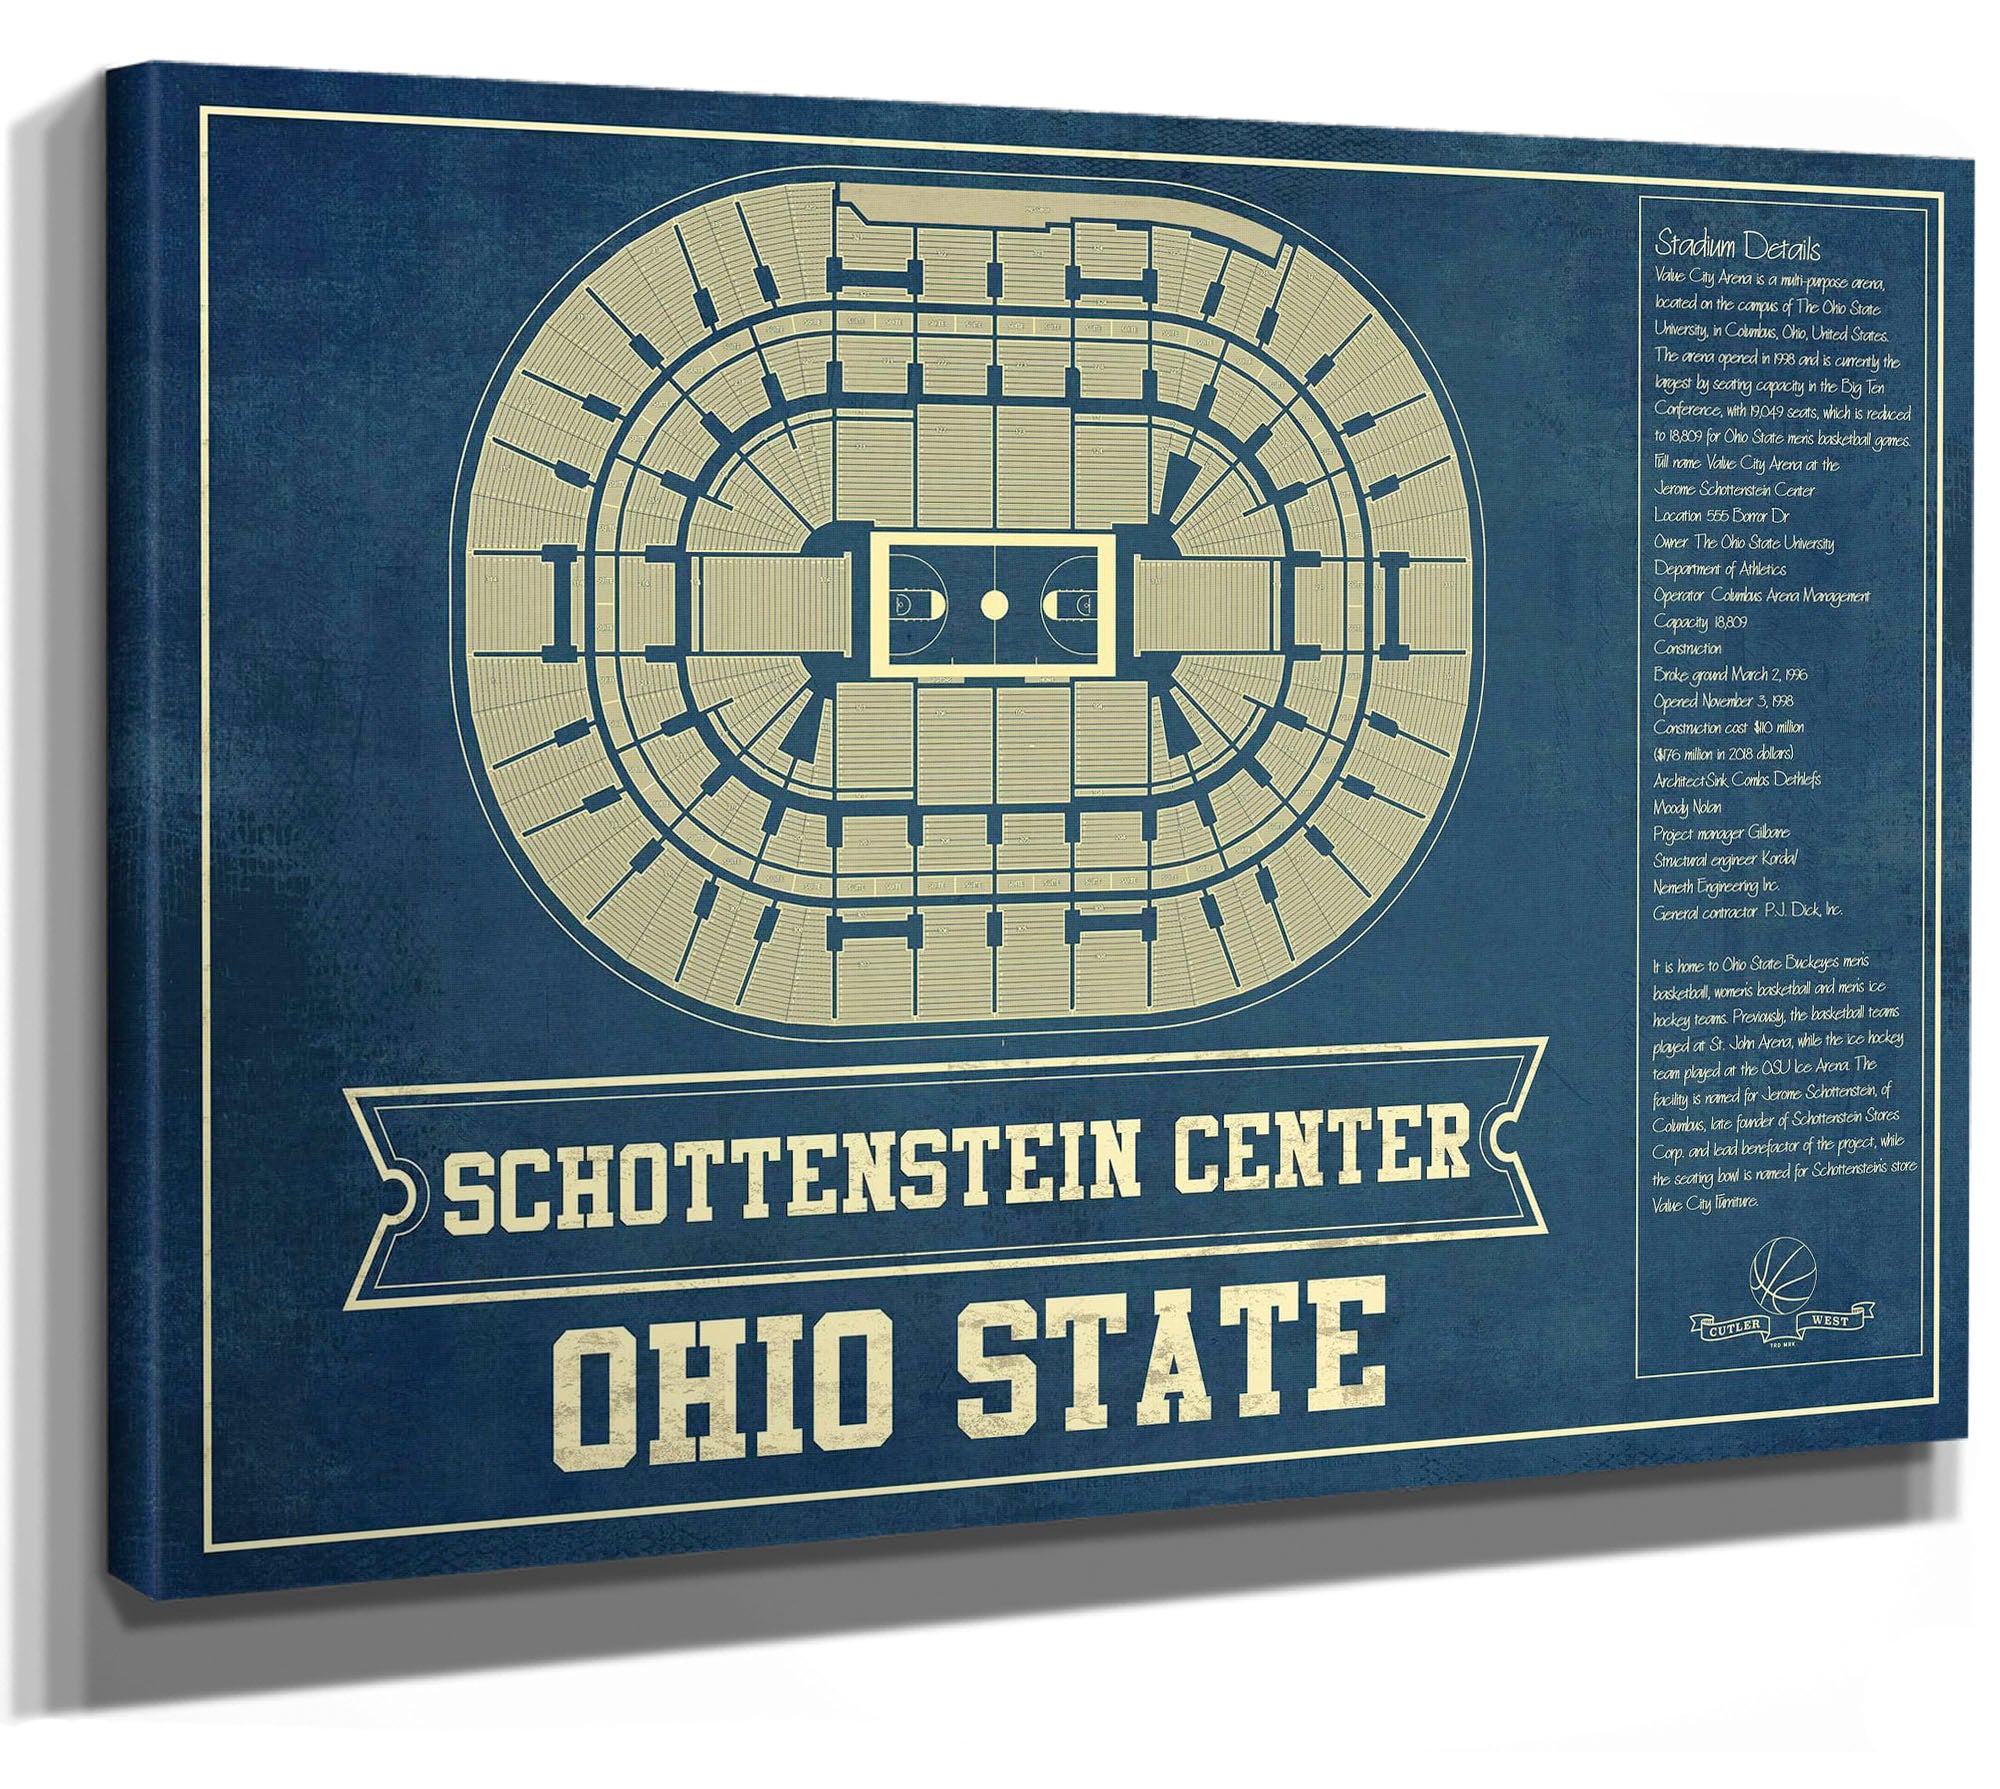 The Schottenstein Center - Ohio State Buckeyes NCAA College Basketball Blueprint Art